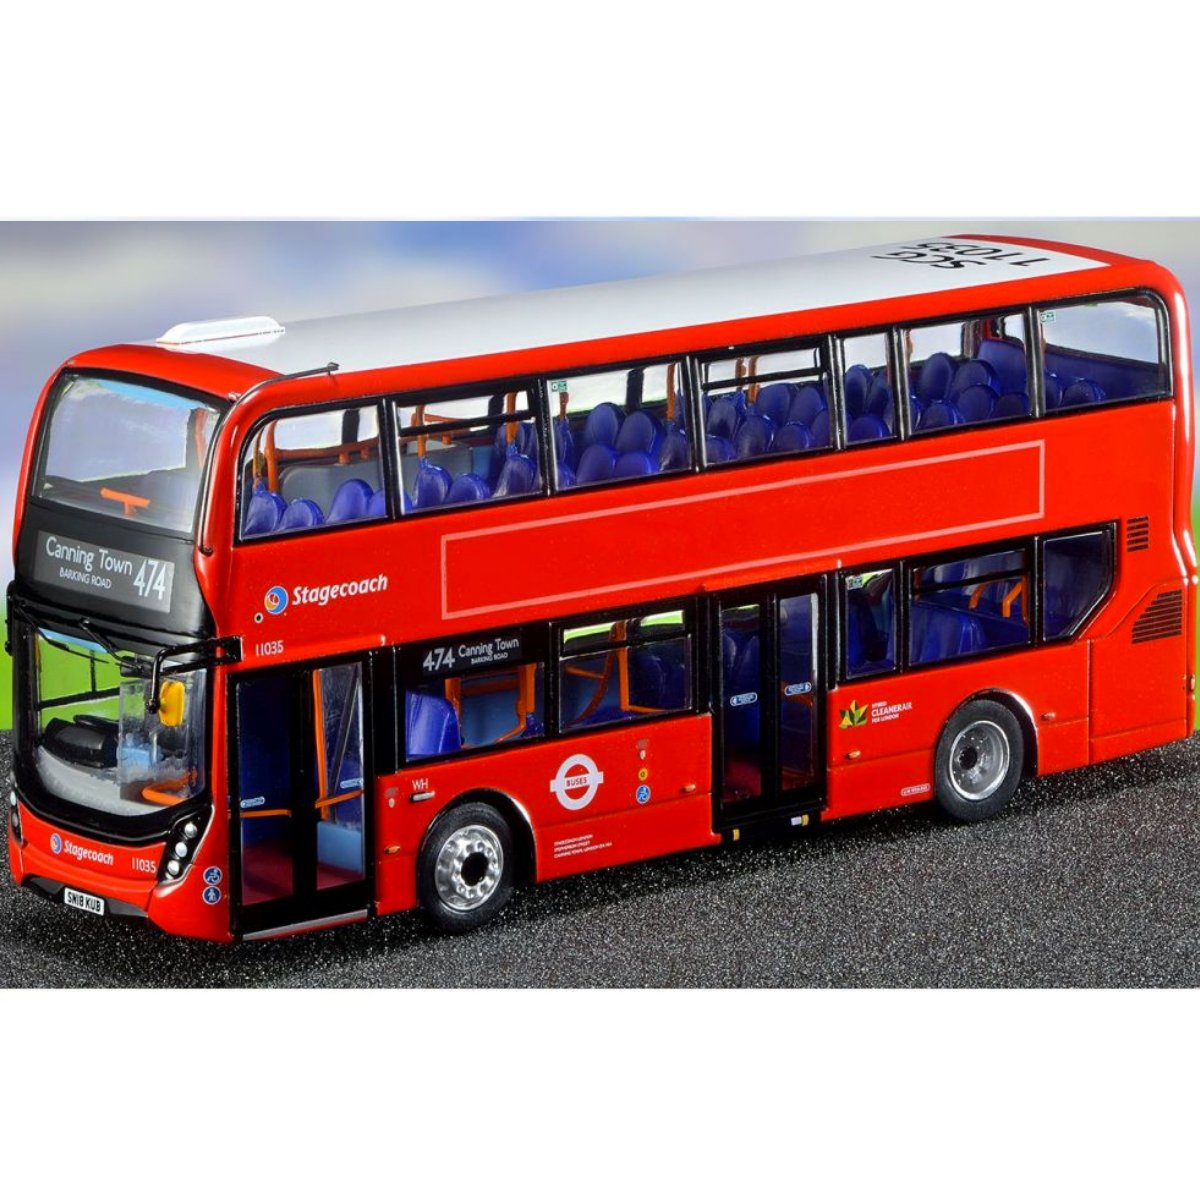 Northcord UK6528 ADL Enviro400 MMC 11035 Stagecoach London